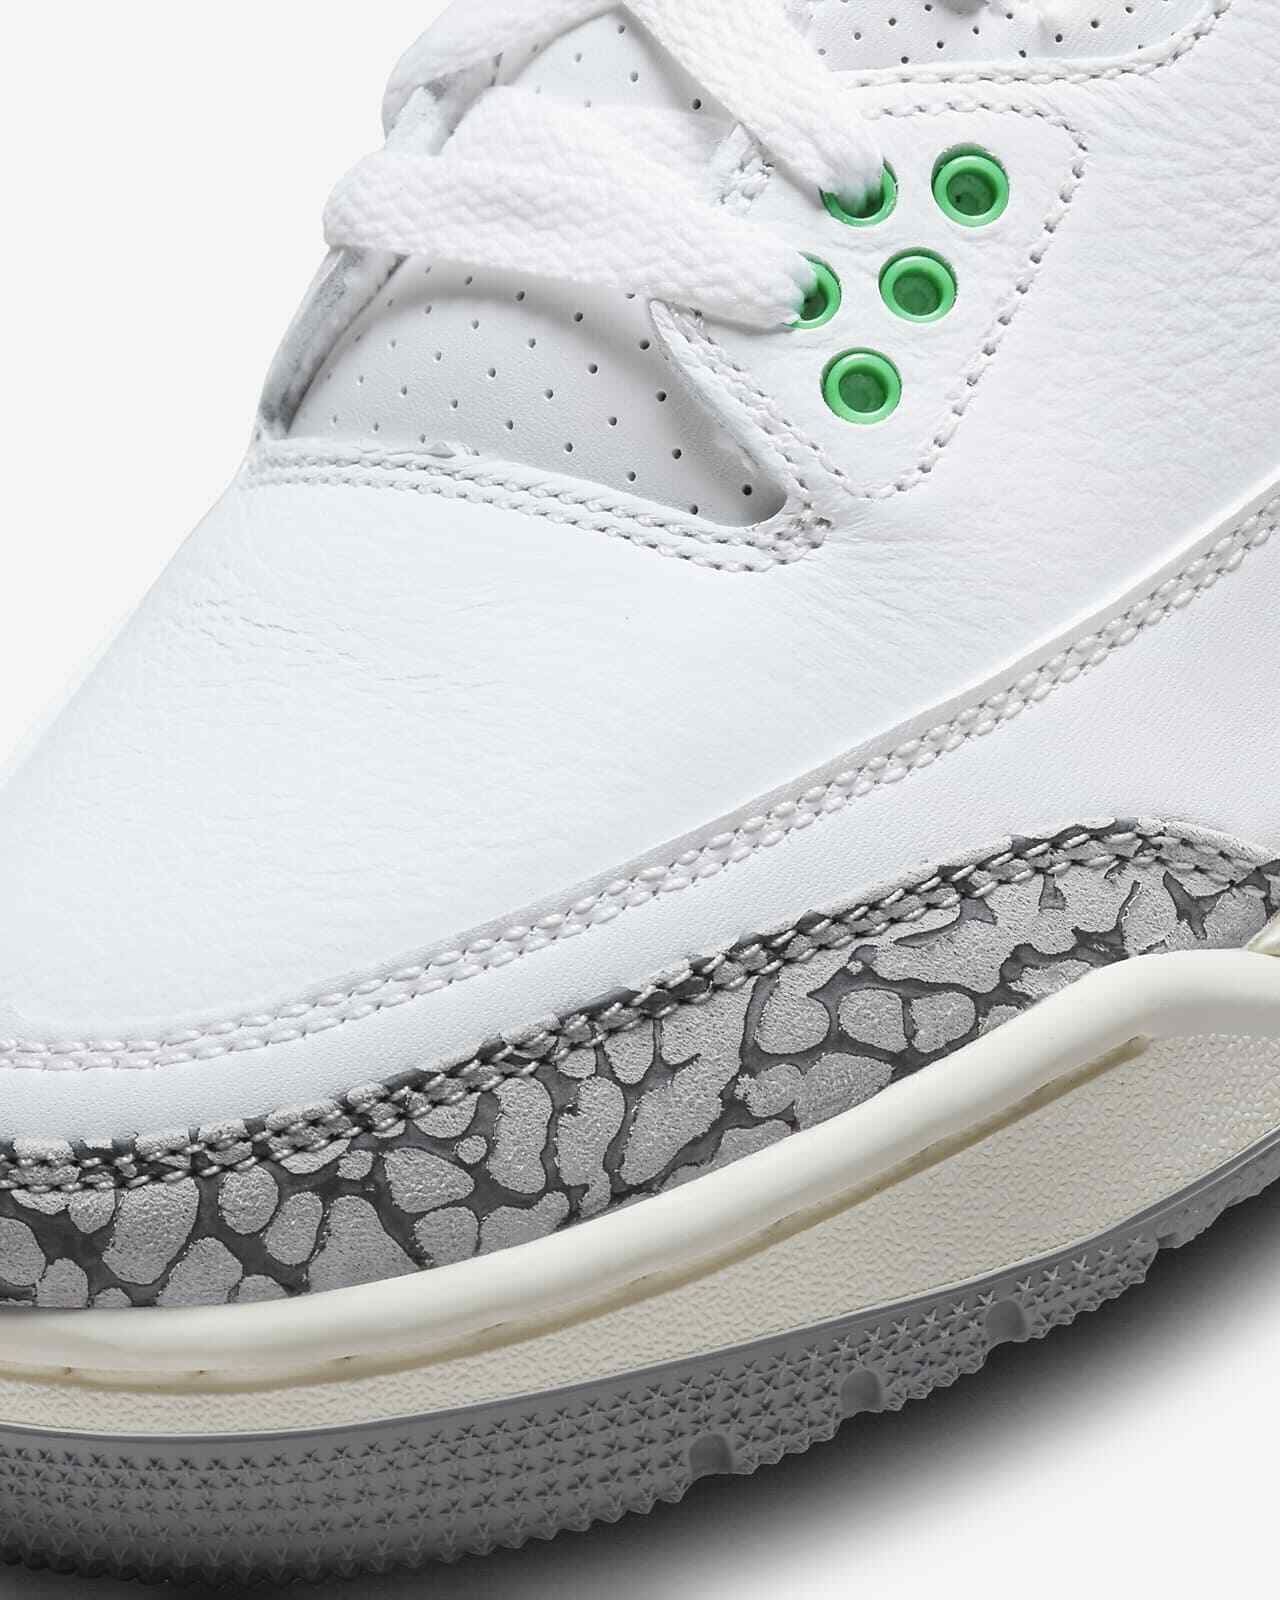 Nike WMNS Air Jordan 3 Retro "Lucky Green" CK9246-136 Sneakers New [US 5-8.5]